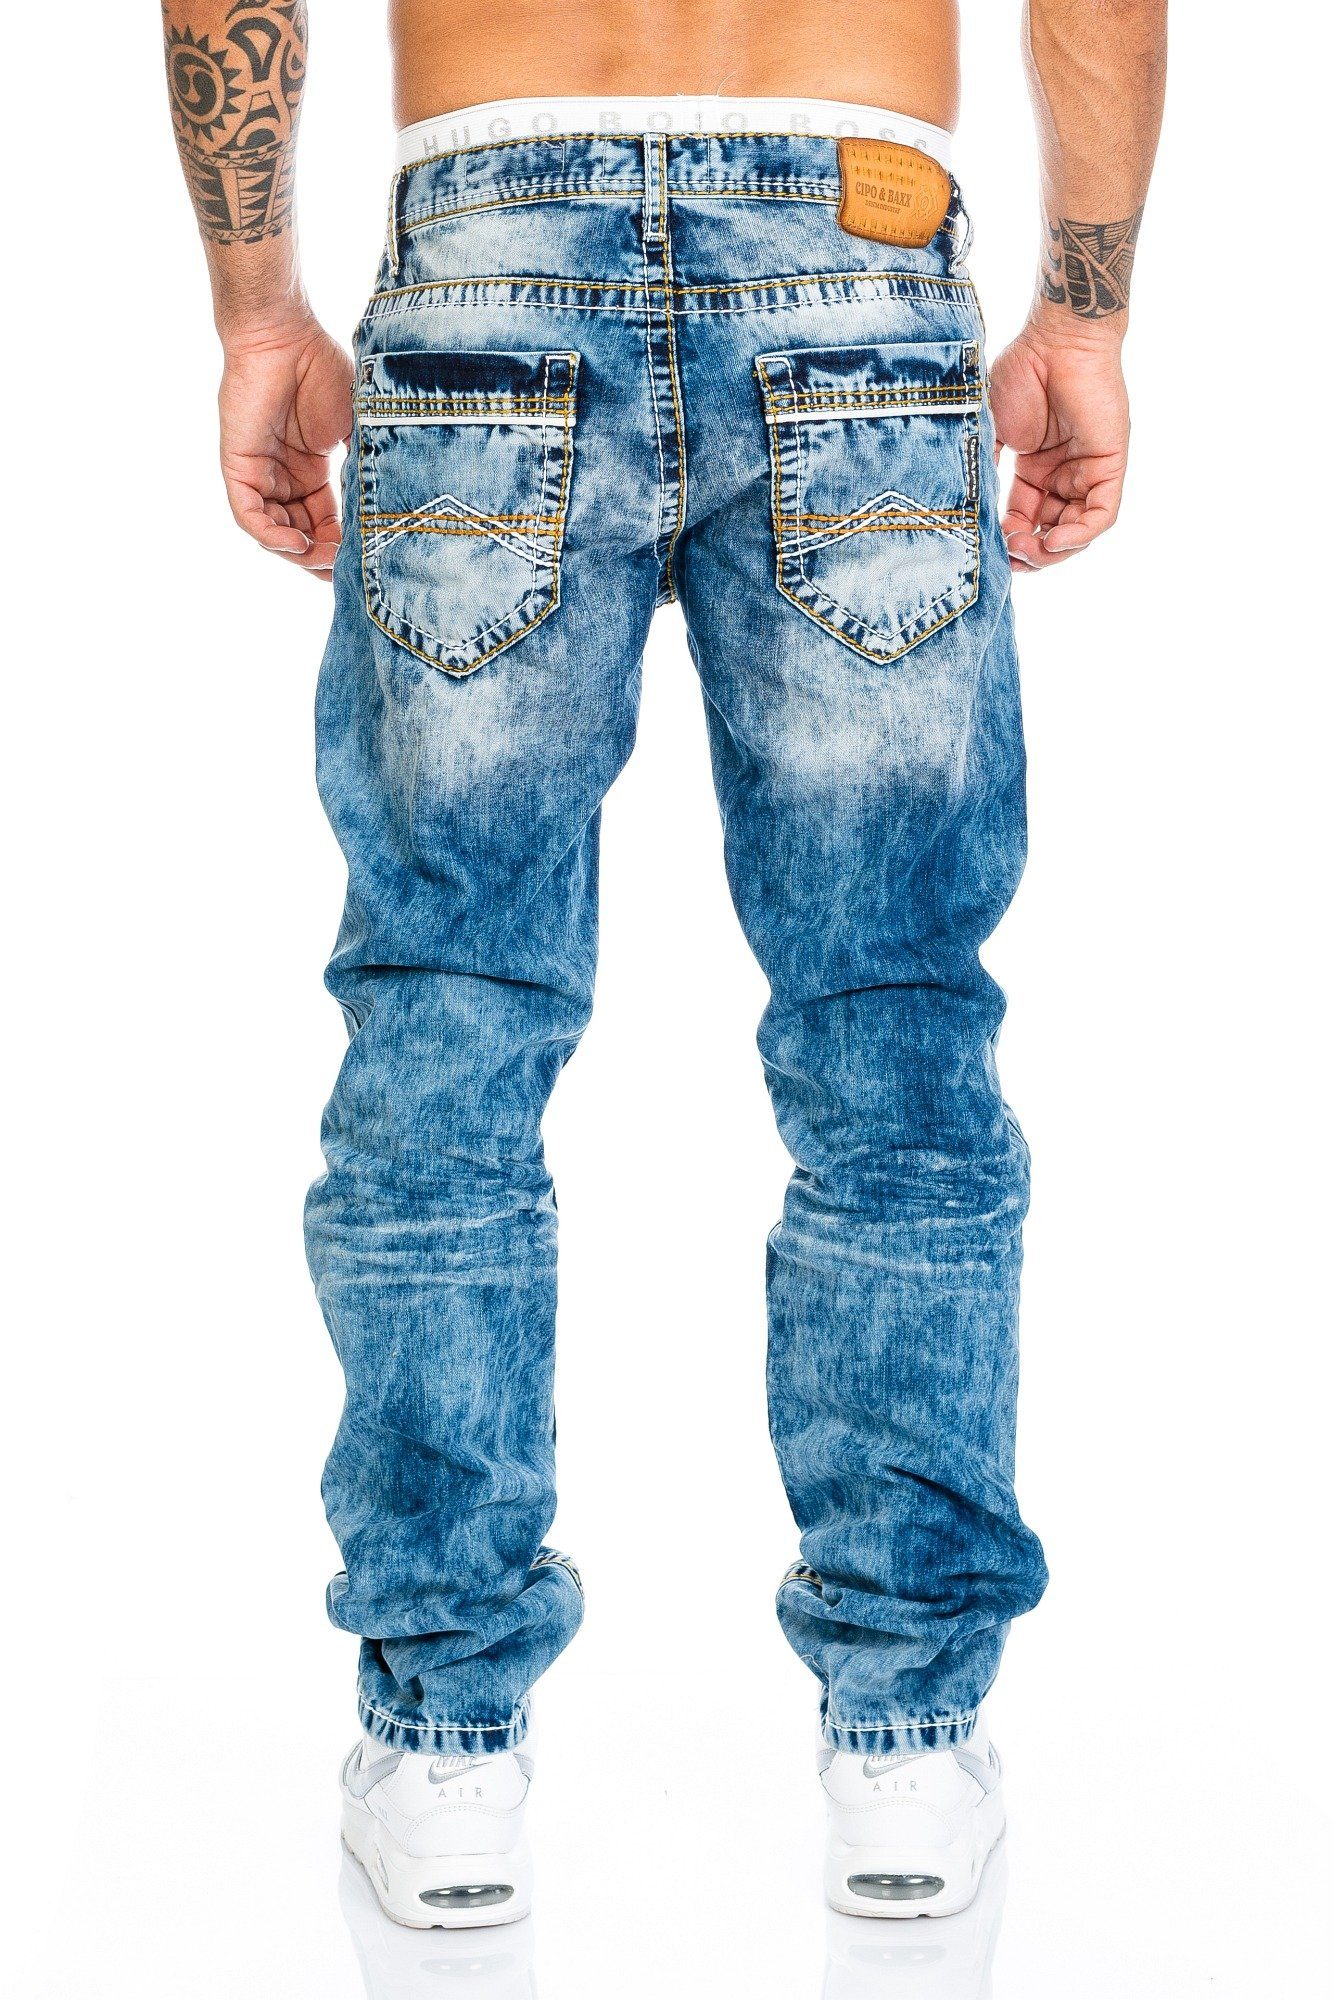 Herren Jeans Cipo & Baxx Regular-fit-Jeans Jeans Hose mit dicken Nähten Stylische Design mit dicken Kontrastnähten